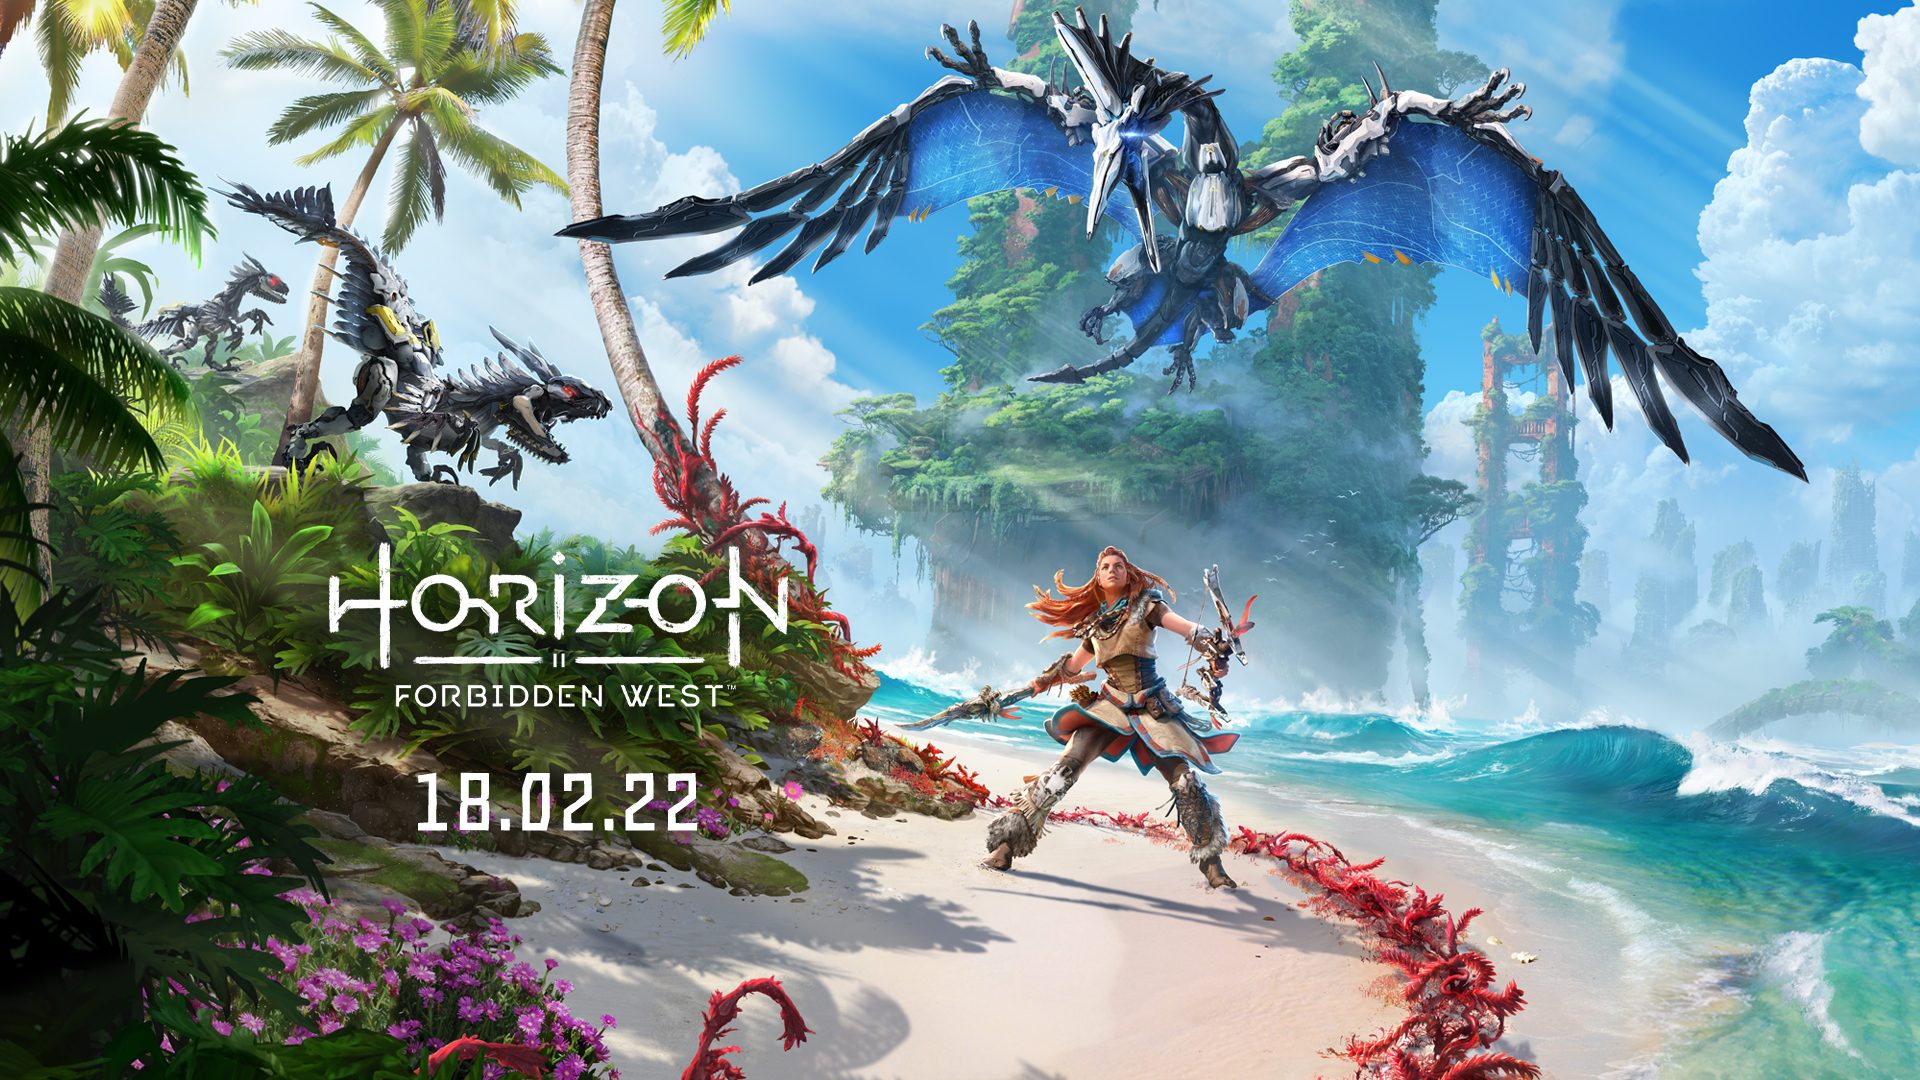 Horizon Forbidden West Arrives On February 18 22 Playstation Blog